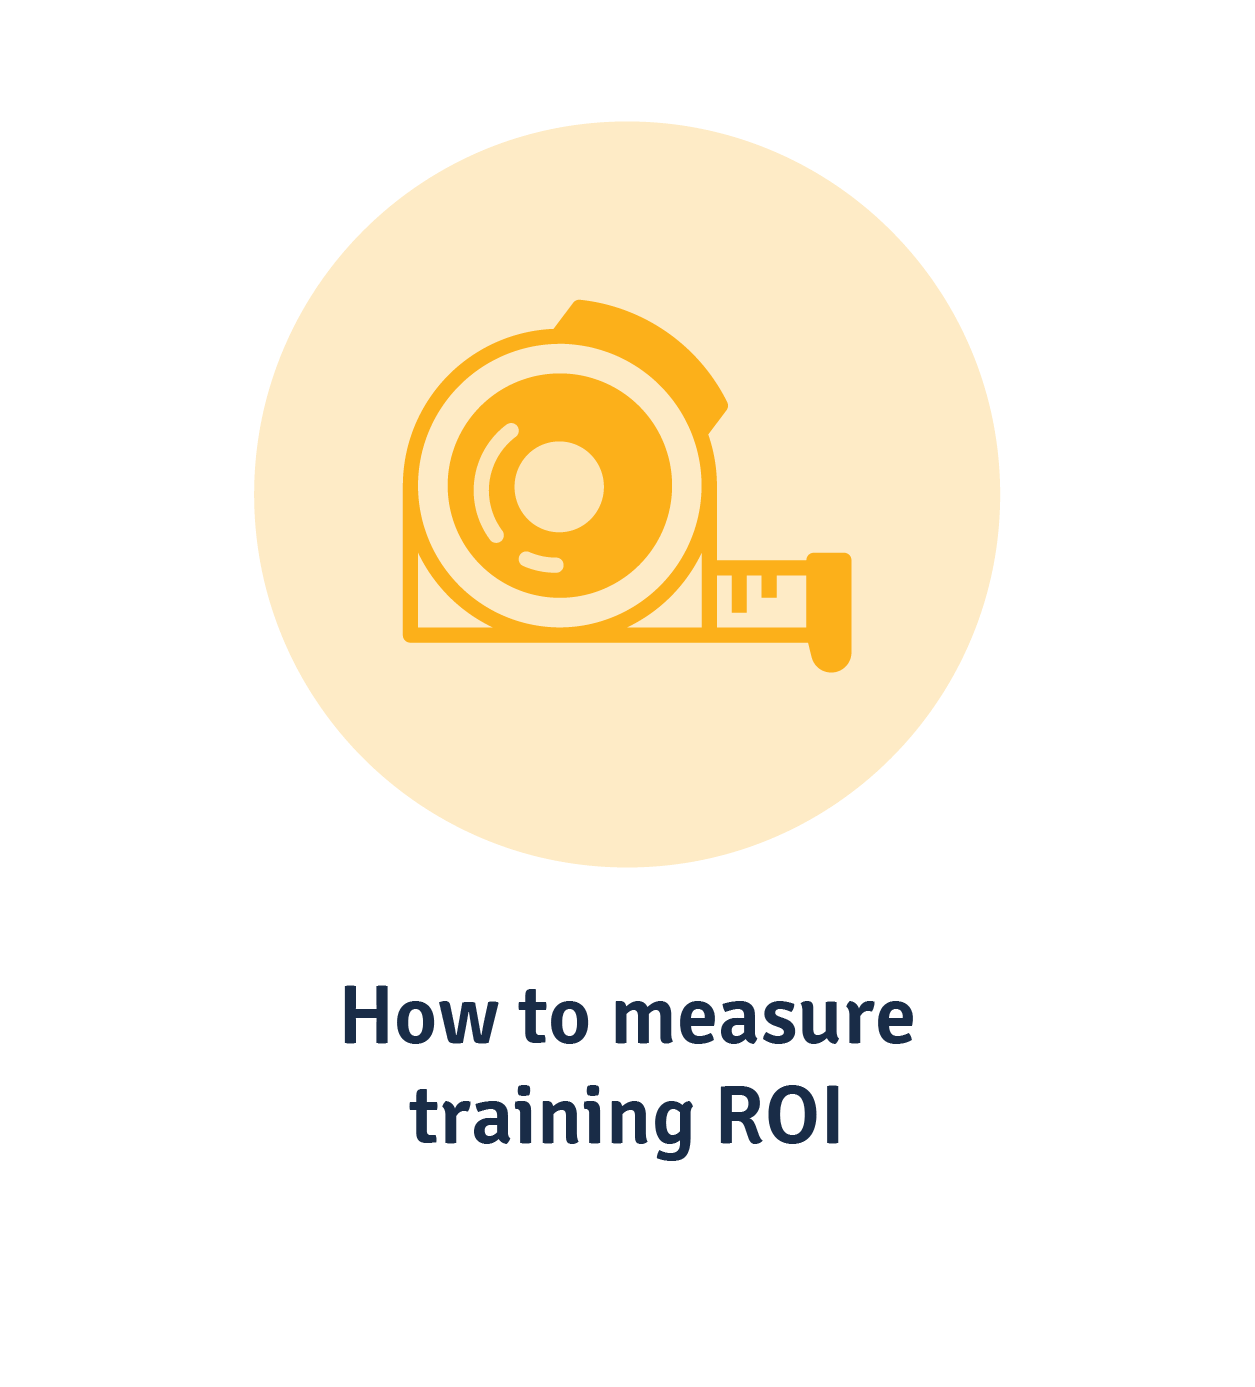 How to measure training ROI